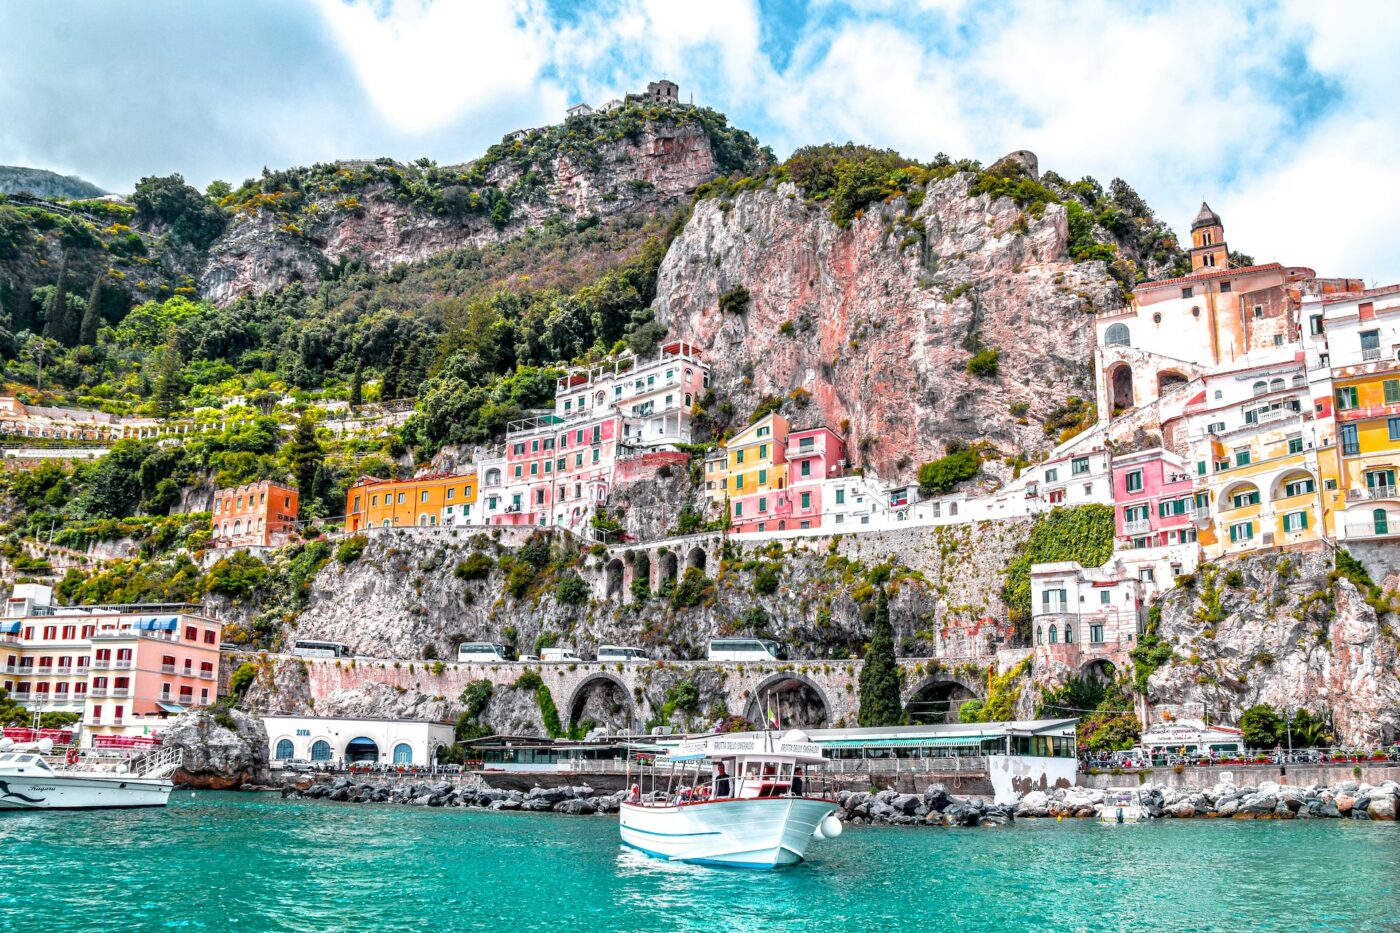 Amalfi Town Italy